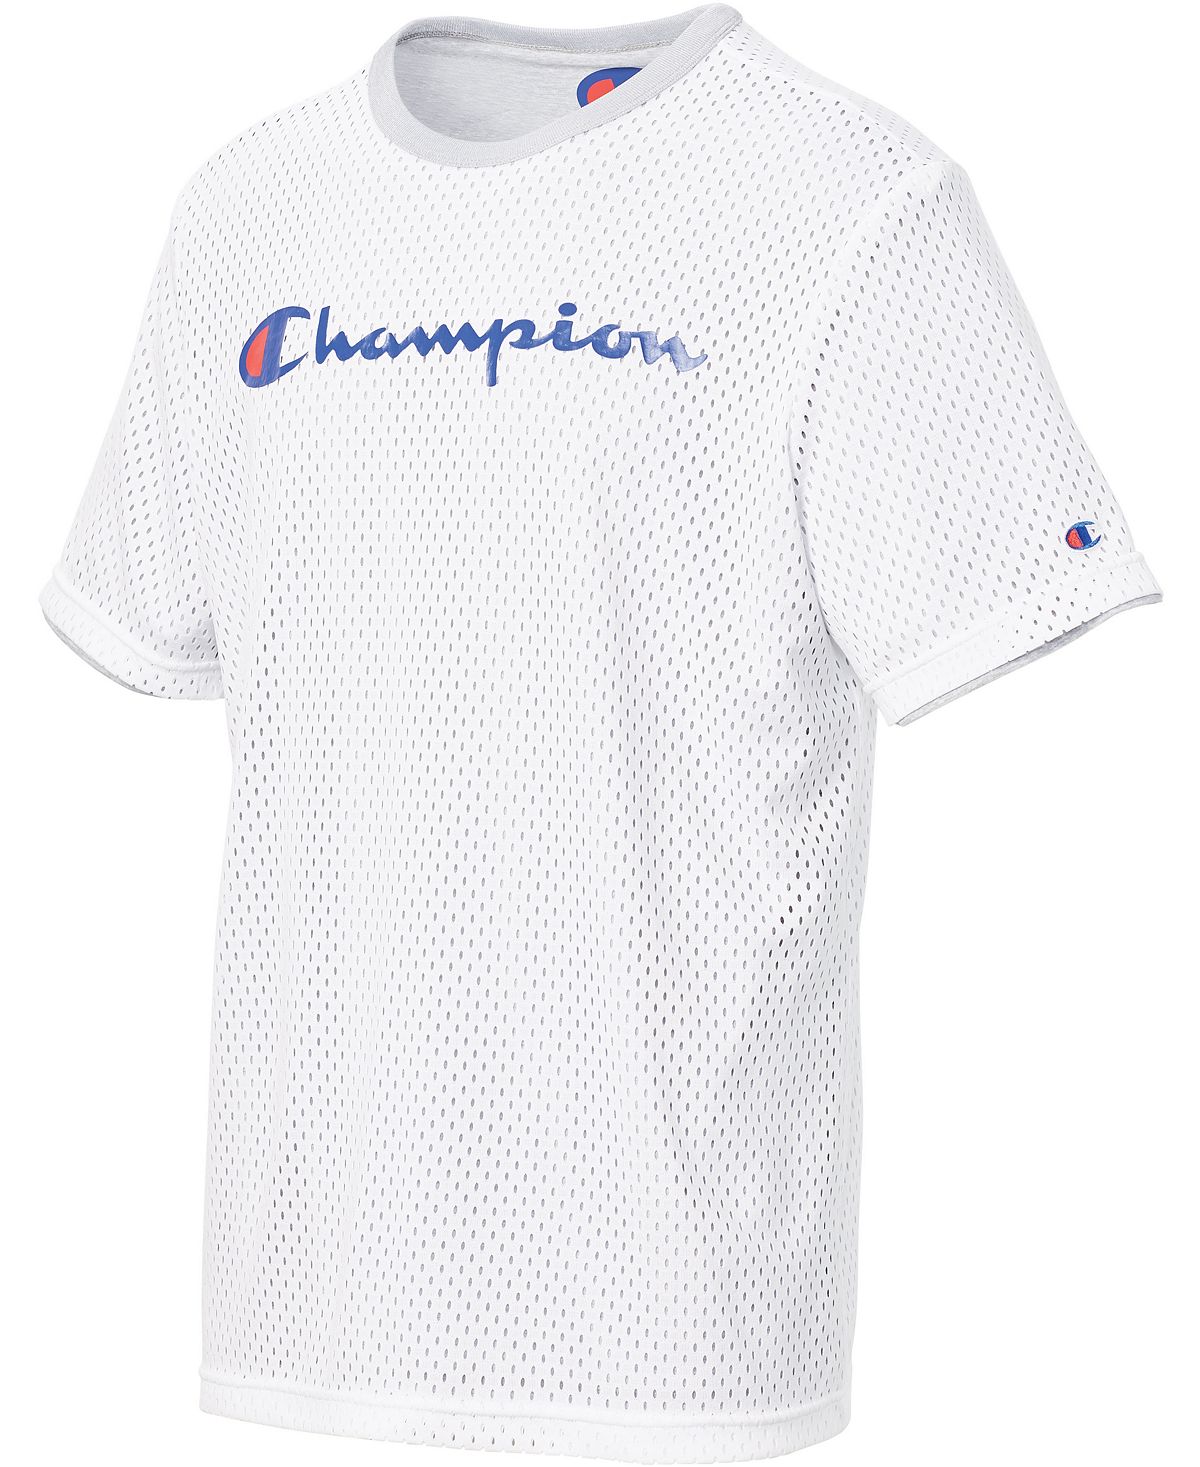 Champion Double Dry Reversible Mesh T-shirt White/Oxford